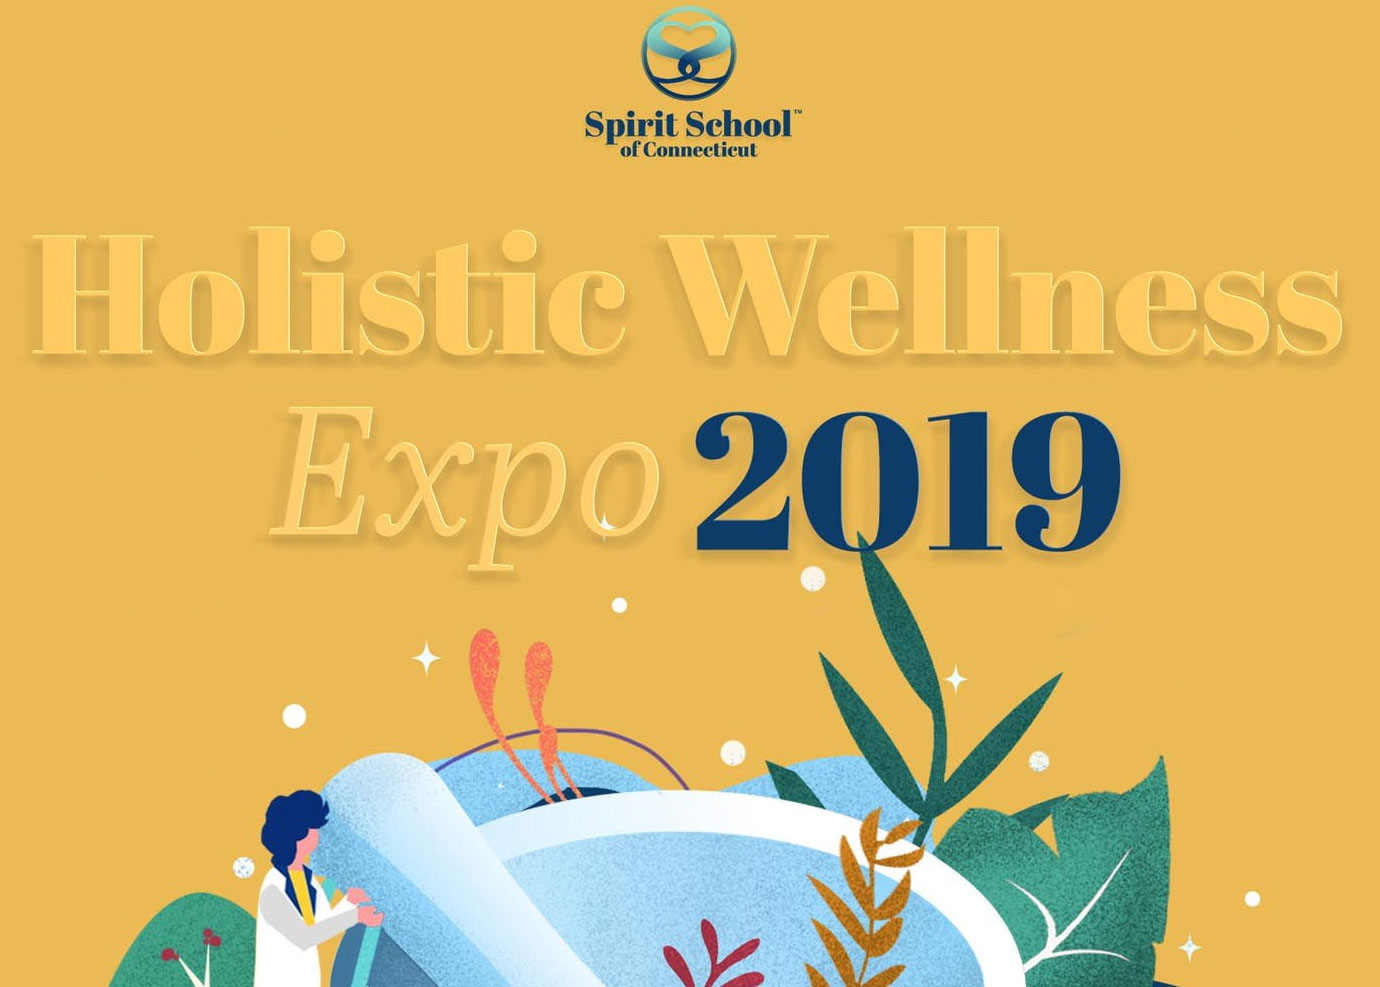 Spirit School of Connecticut's Winter Holistic Wellness Expo